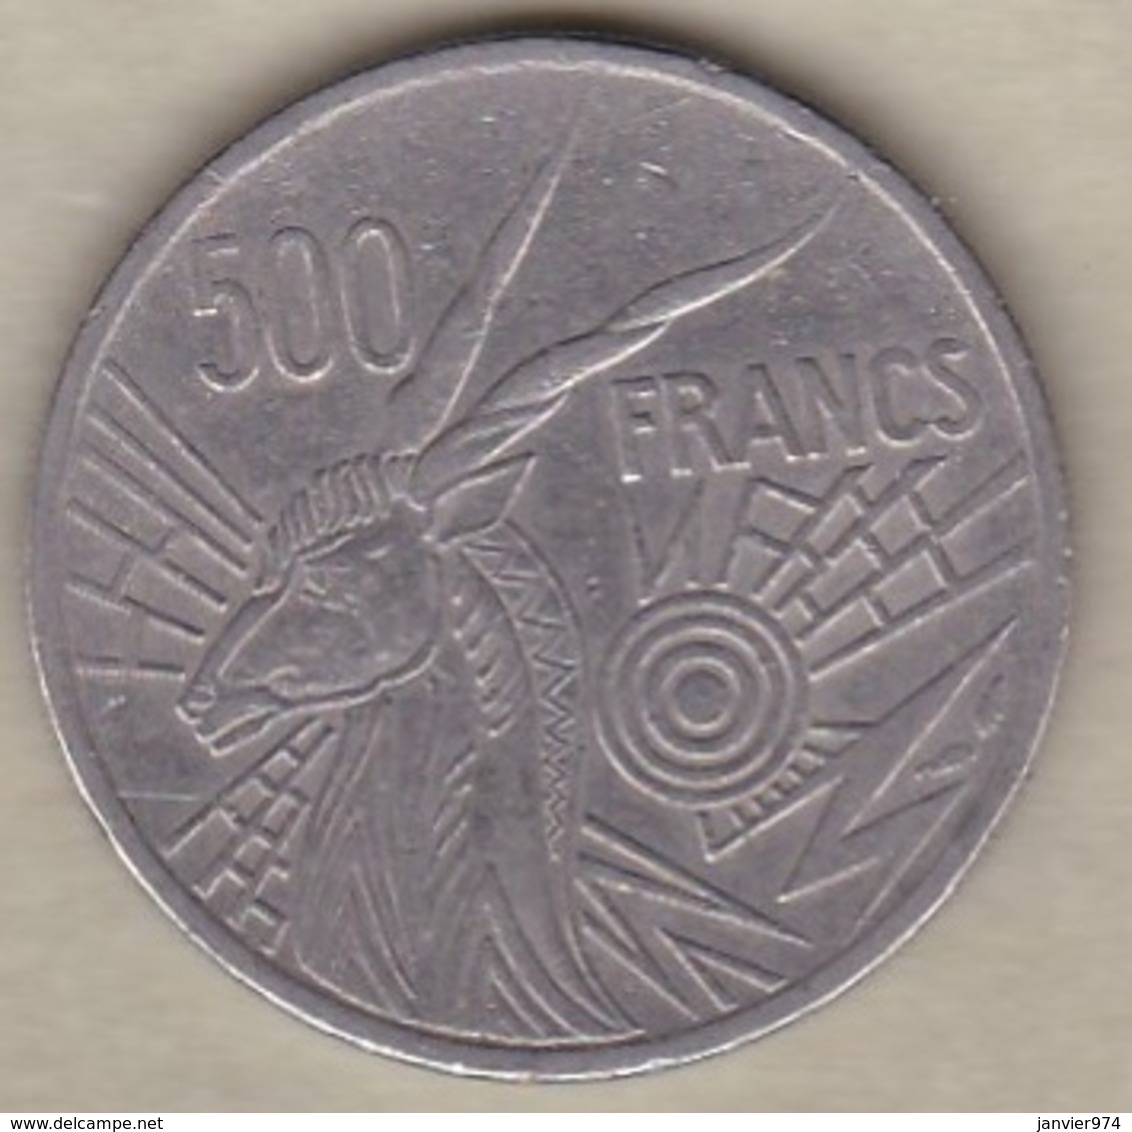 Banque Des Etats De L'Afrique Centrale. 500 Francs 1976 E Cameroun, En Nickel, KM# 12 - Cameroun